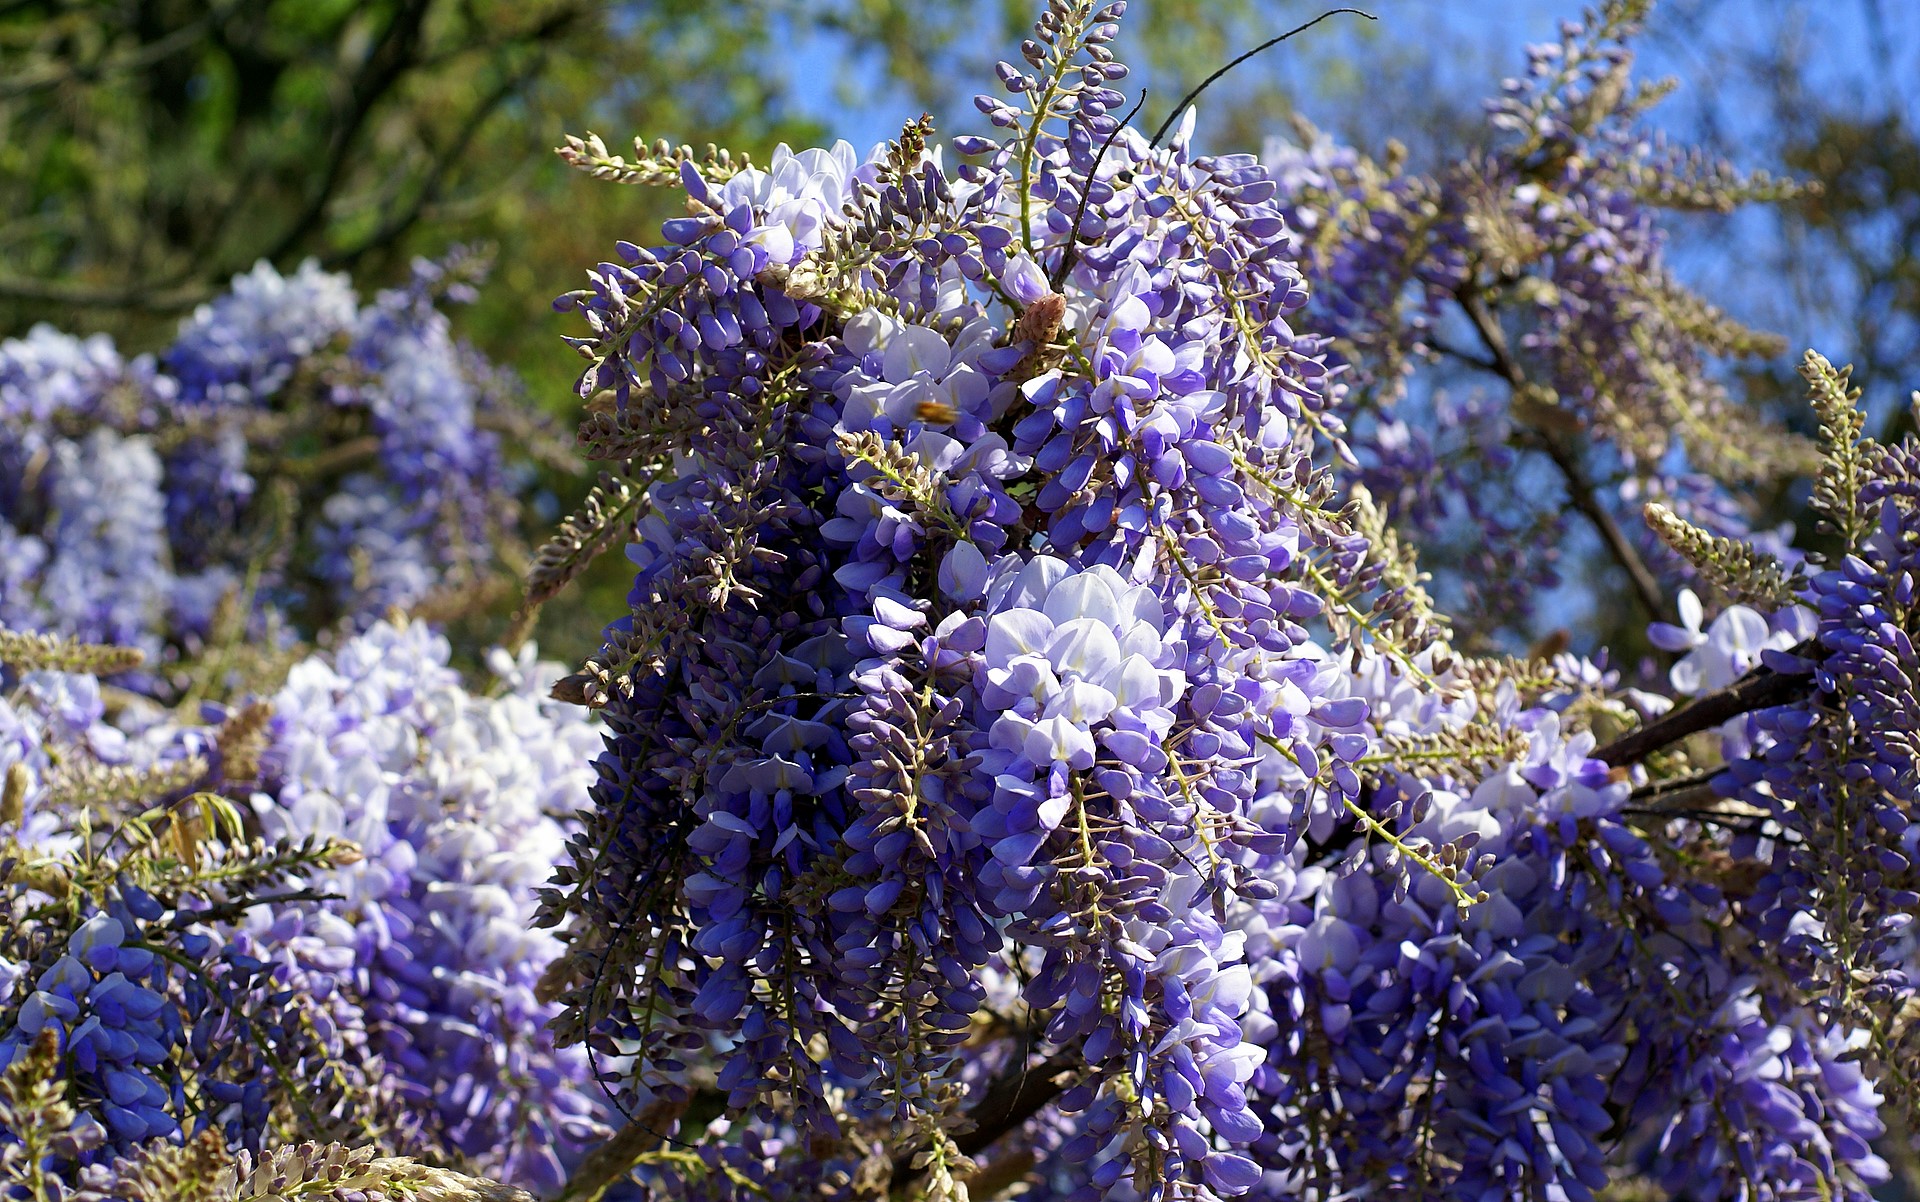 http://www.fabiovisentin.com/photography/photo/9/wisteria-dsc02638.jpg